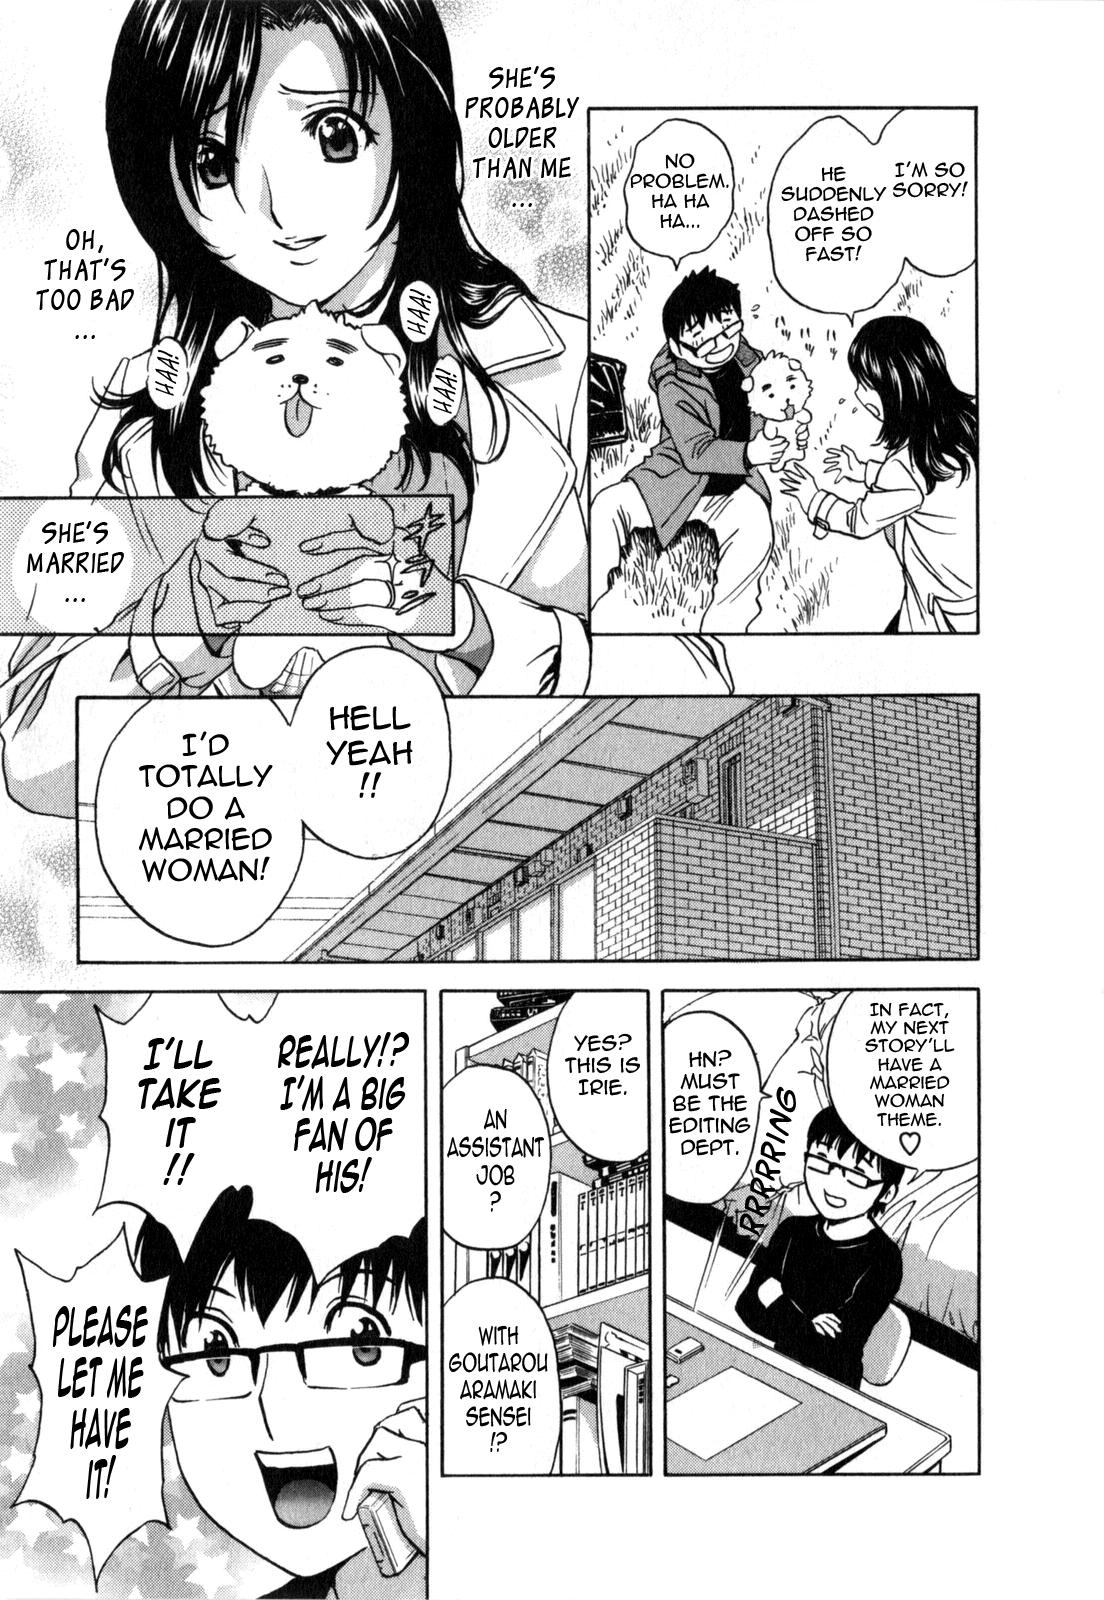 Life with Married Women Just Like a Manga 1 11